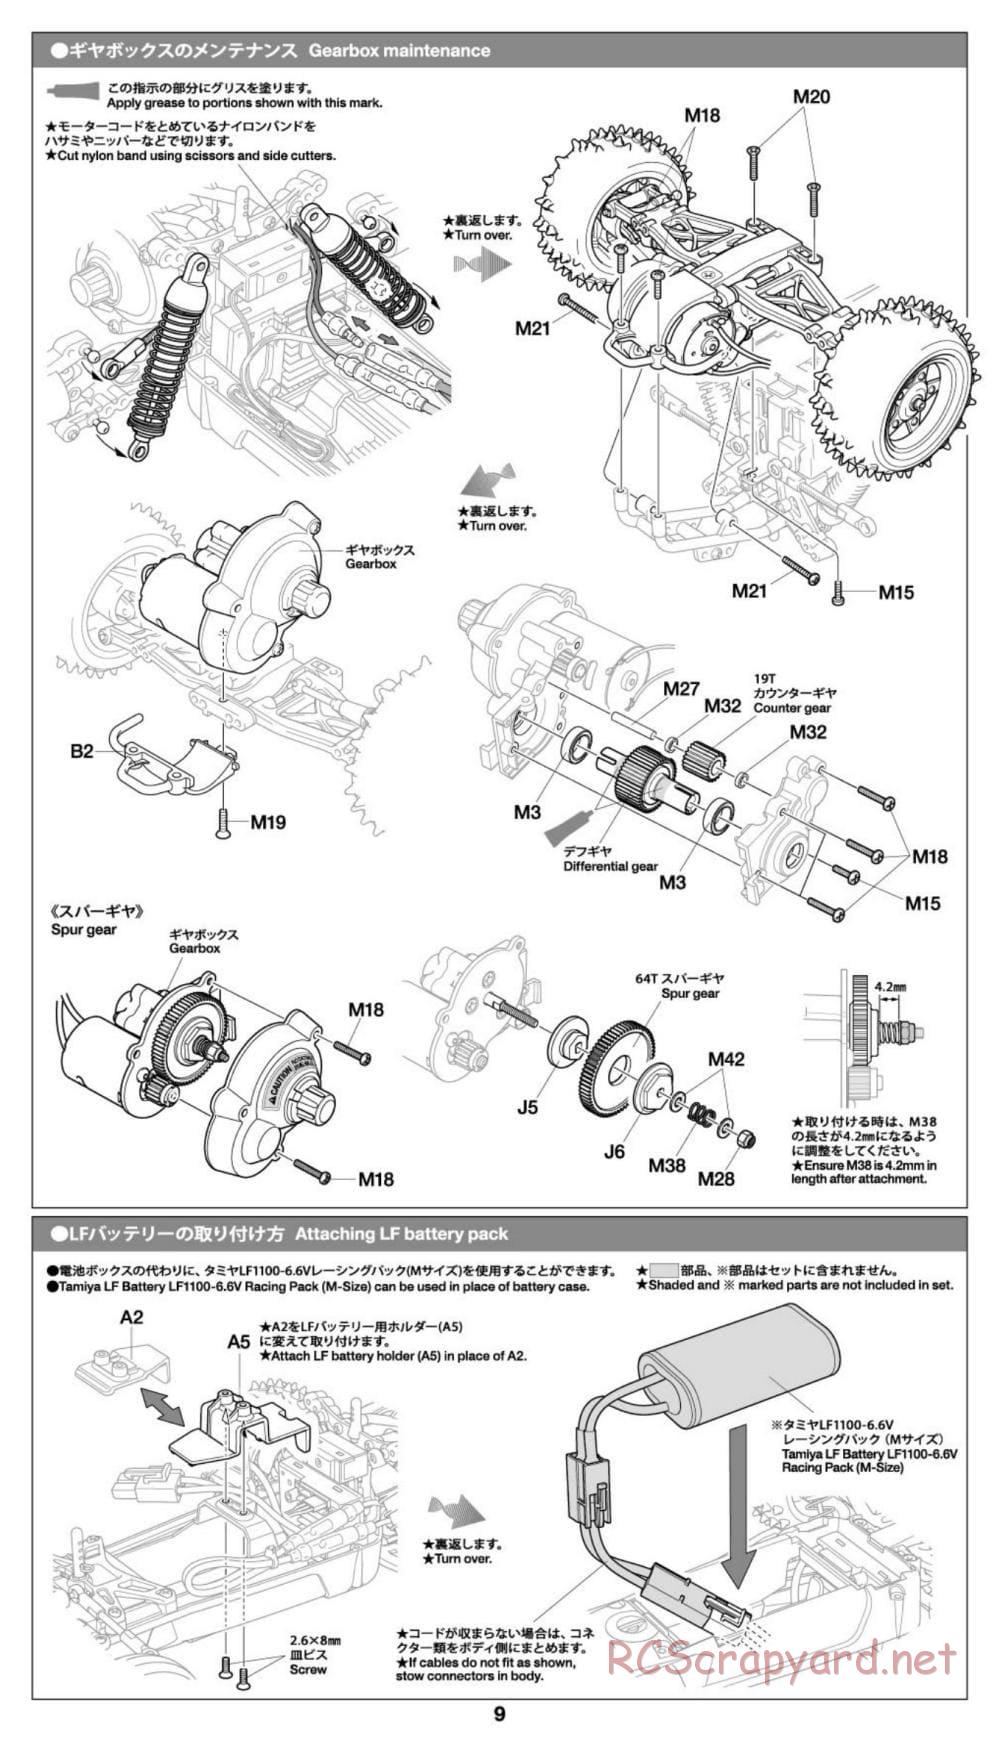 Tamiya - GB-01S Chassis - Manual - Page 9